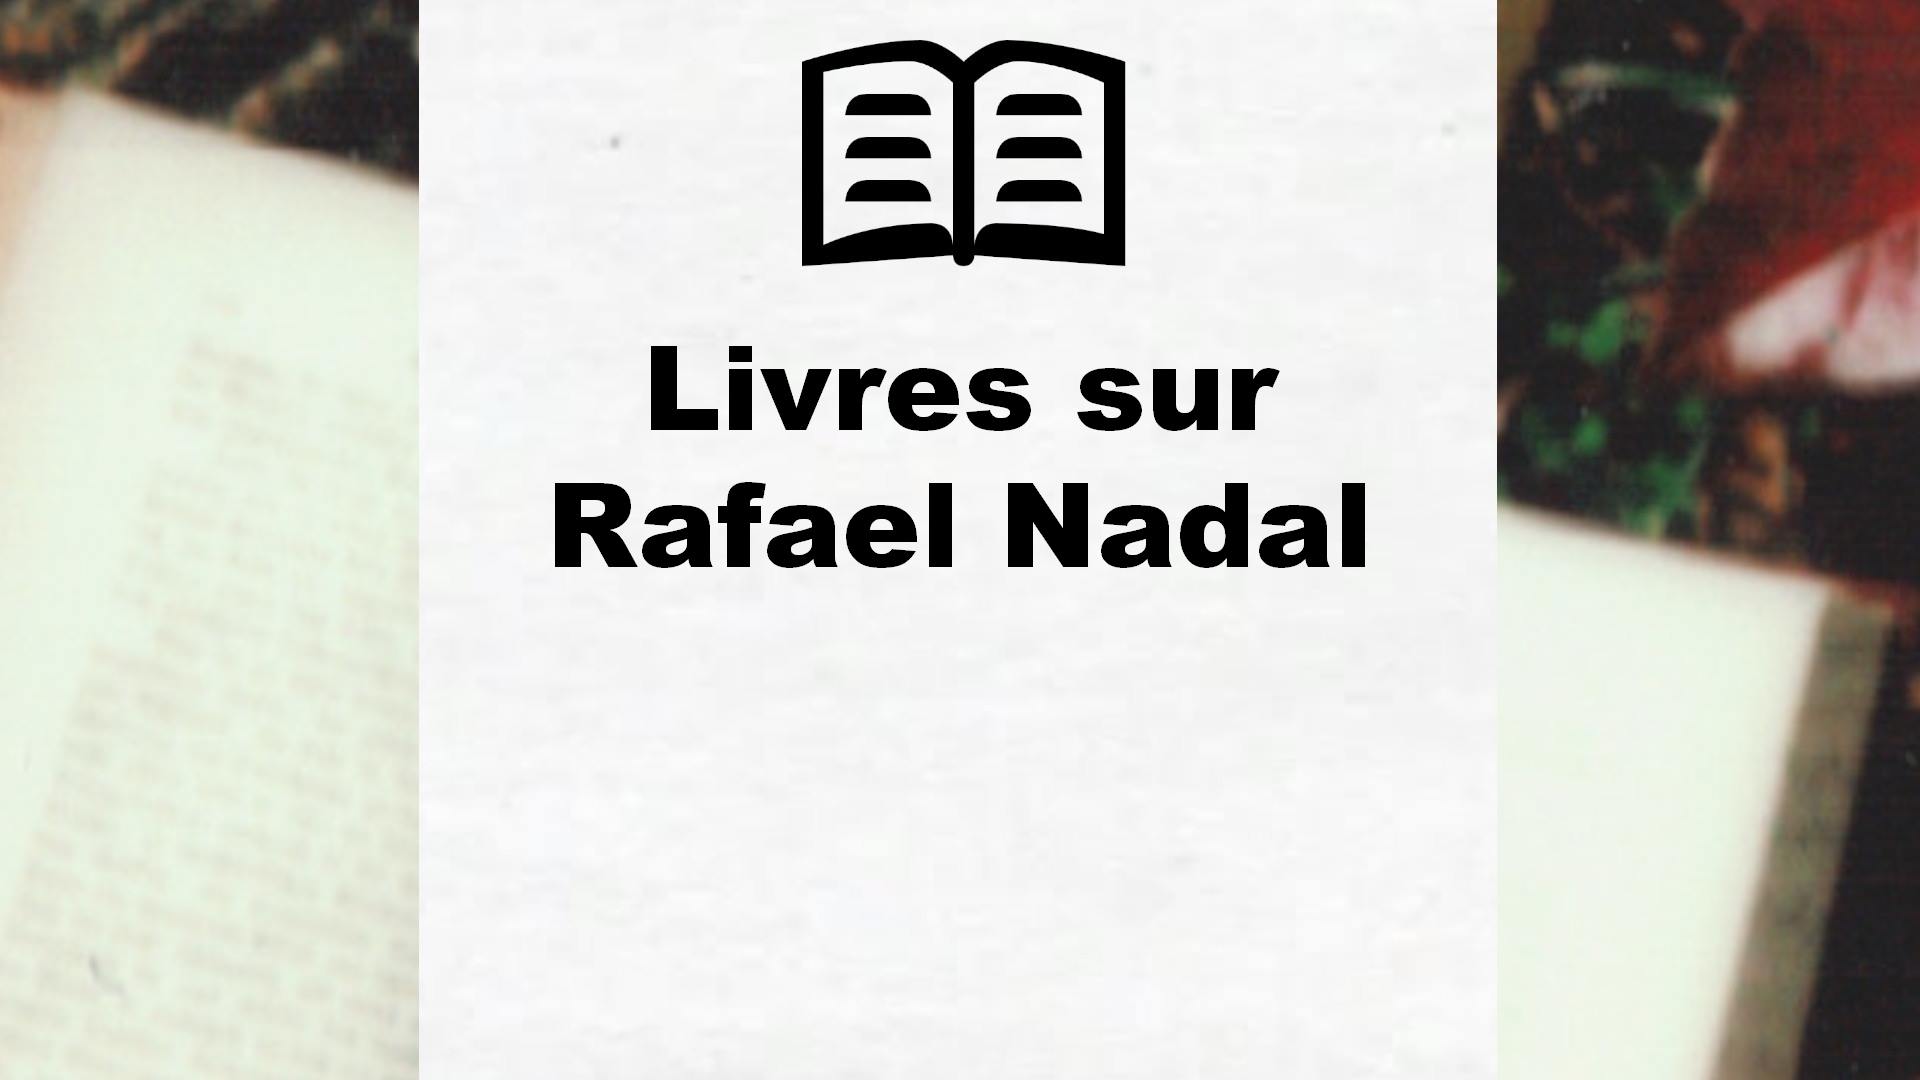 Livres sur Rafael Nadal